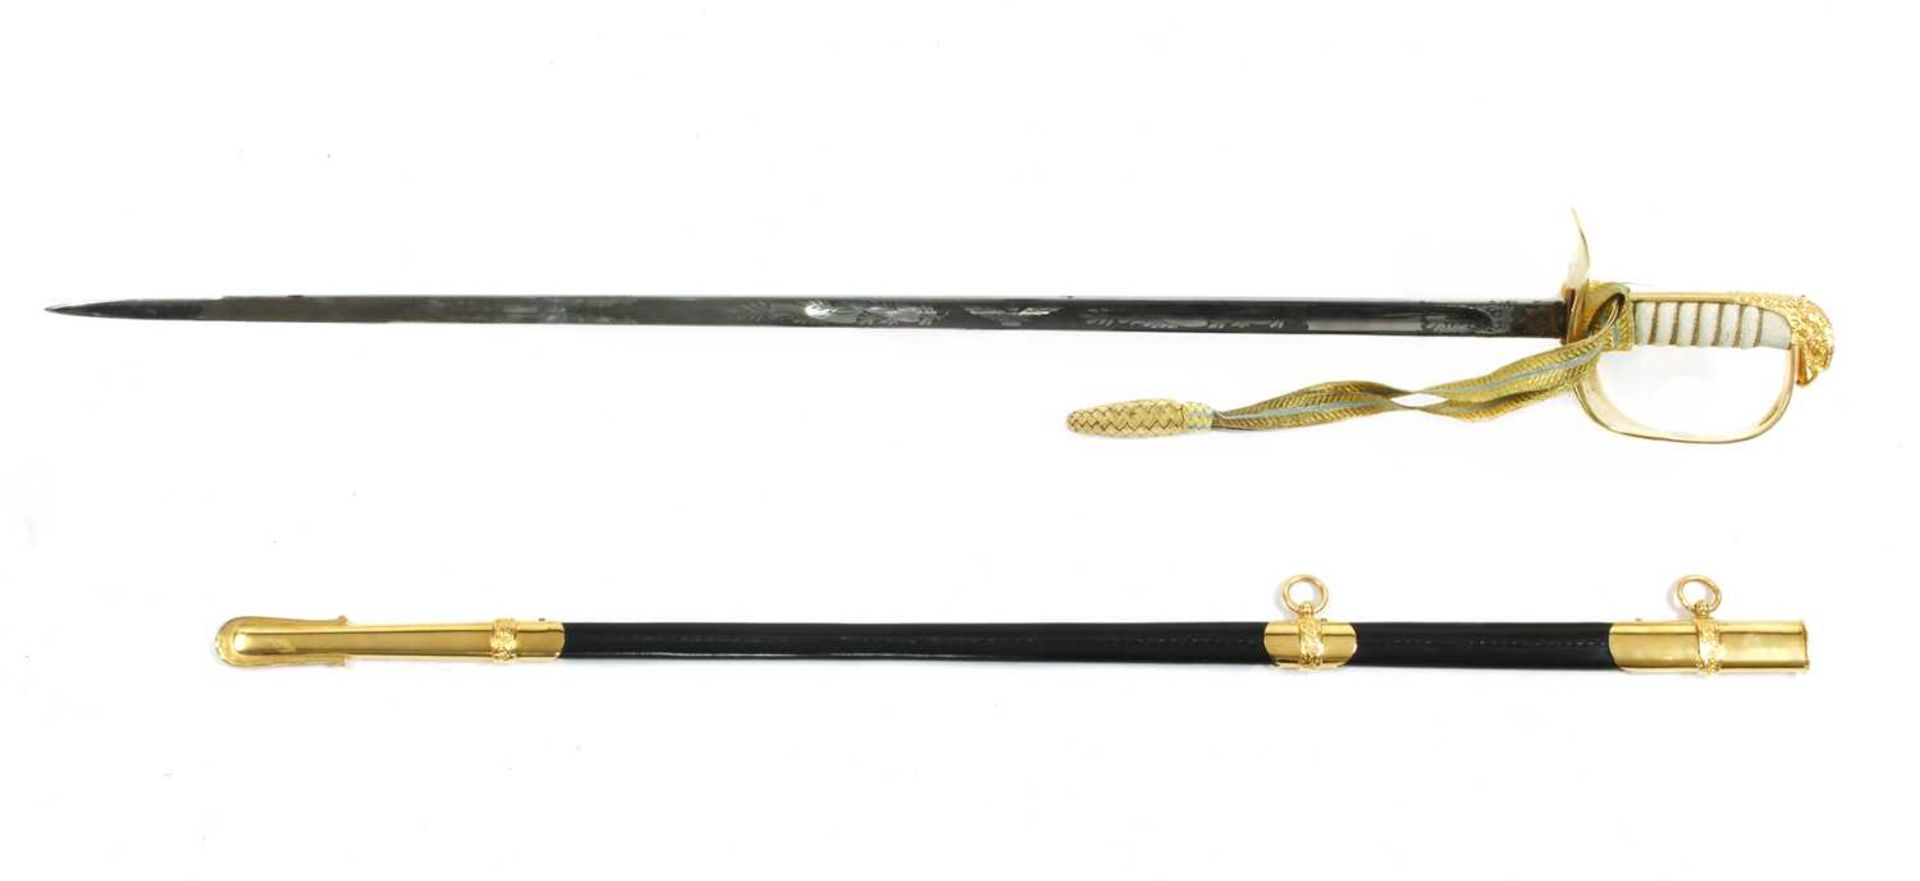 An Elizabeth II RAF dress sword, scabbard and ribbon, - Image 2 of 6